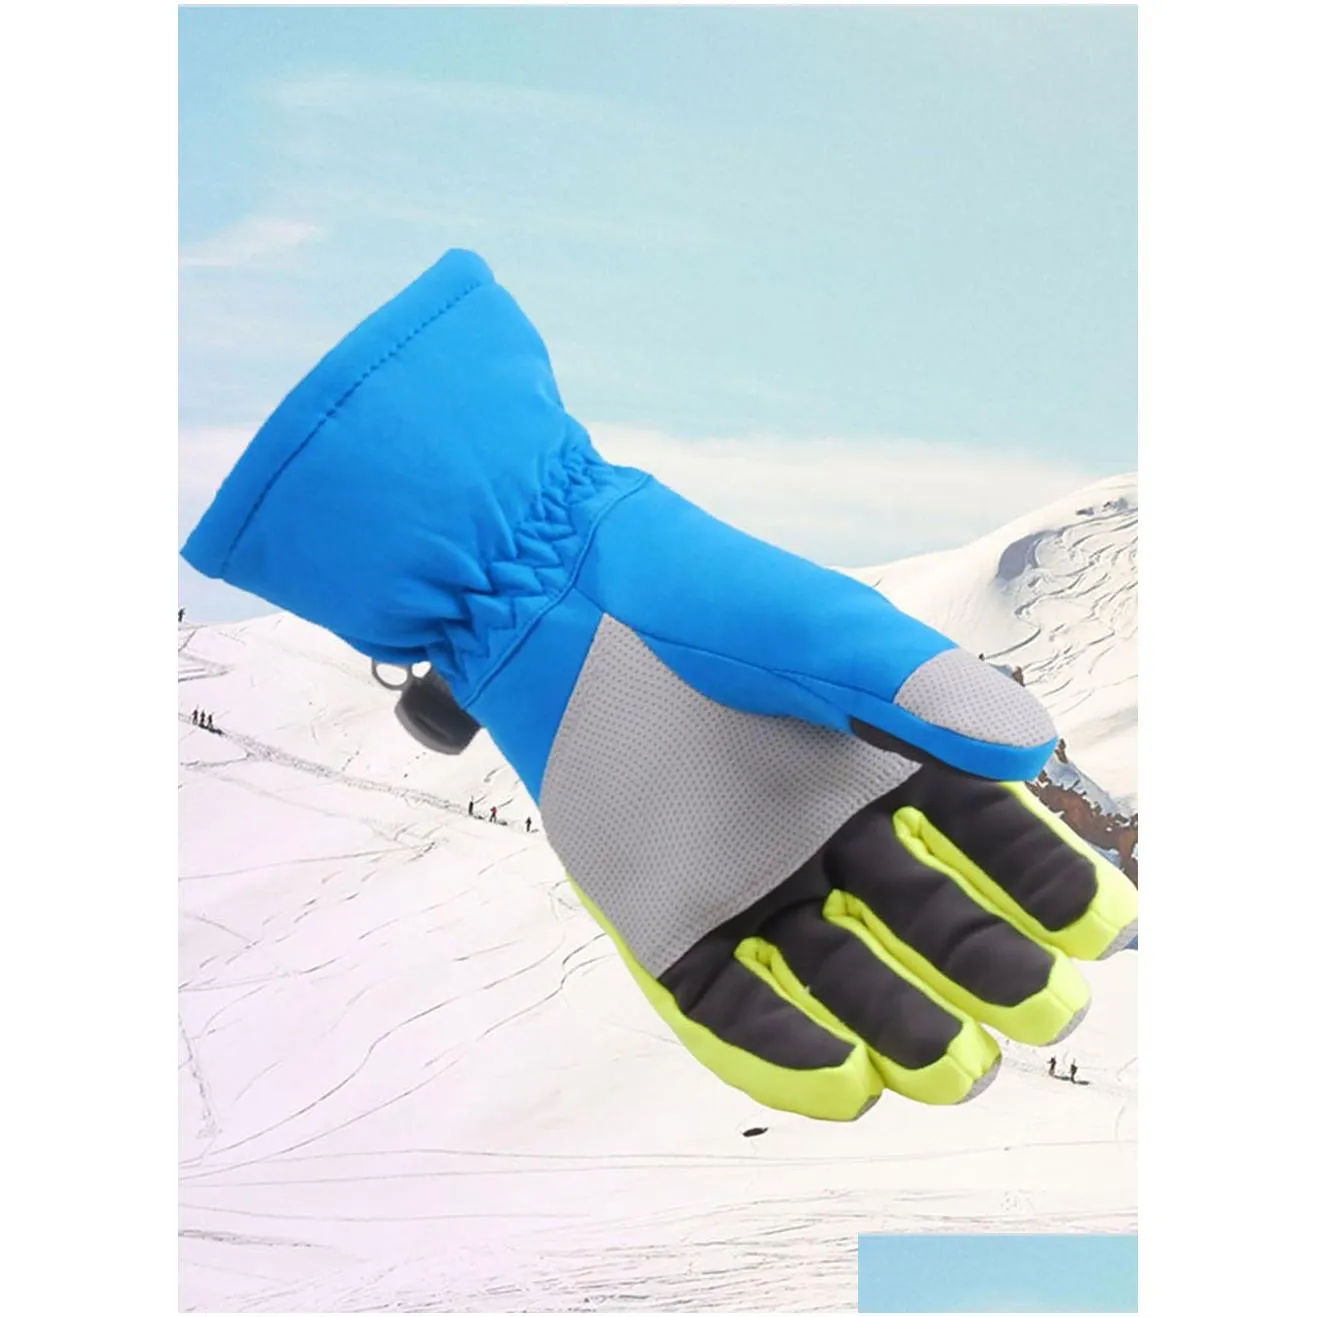 marsnow winter professional ski gloves girls boys adult waterproof warm snow kids windproof skiing snowboard gloves